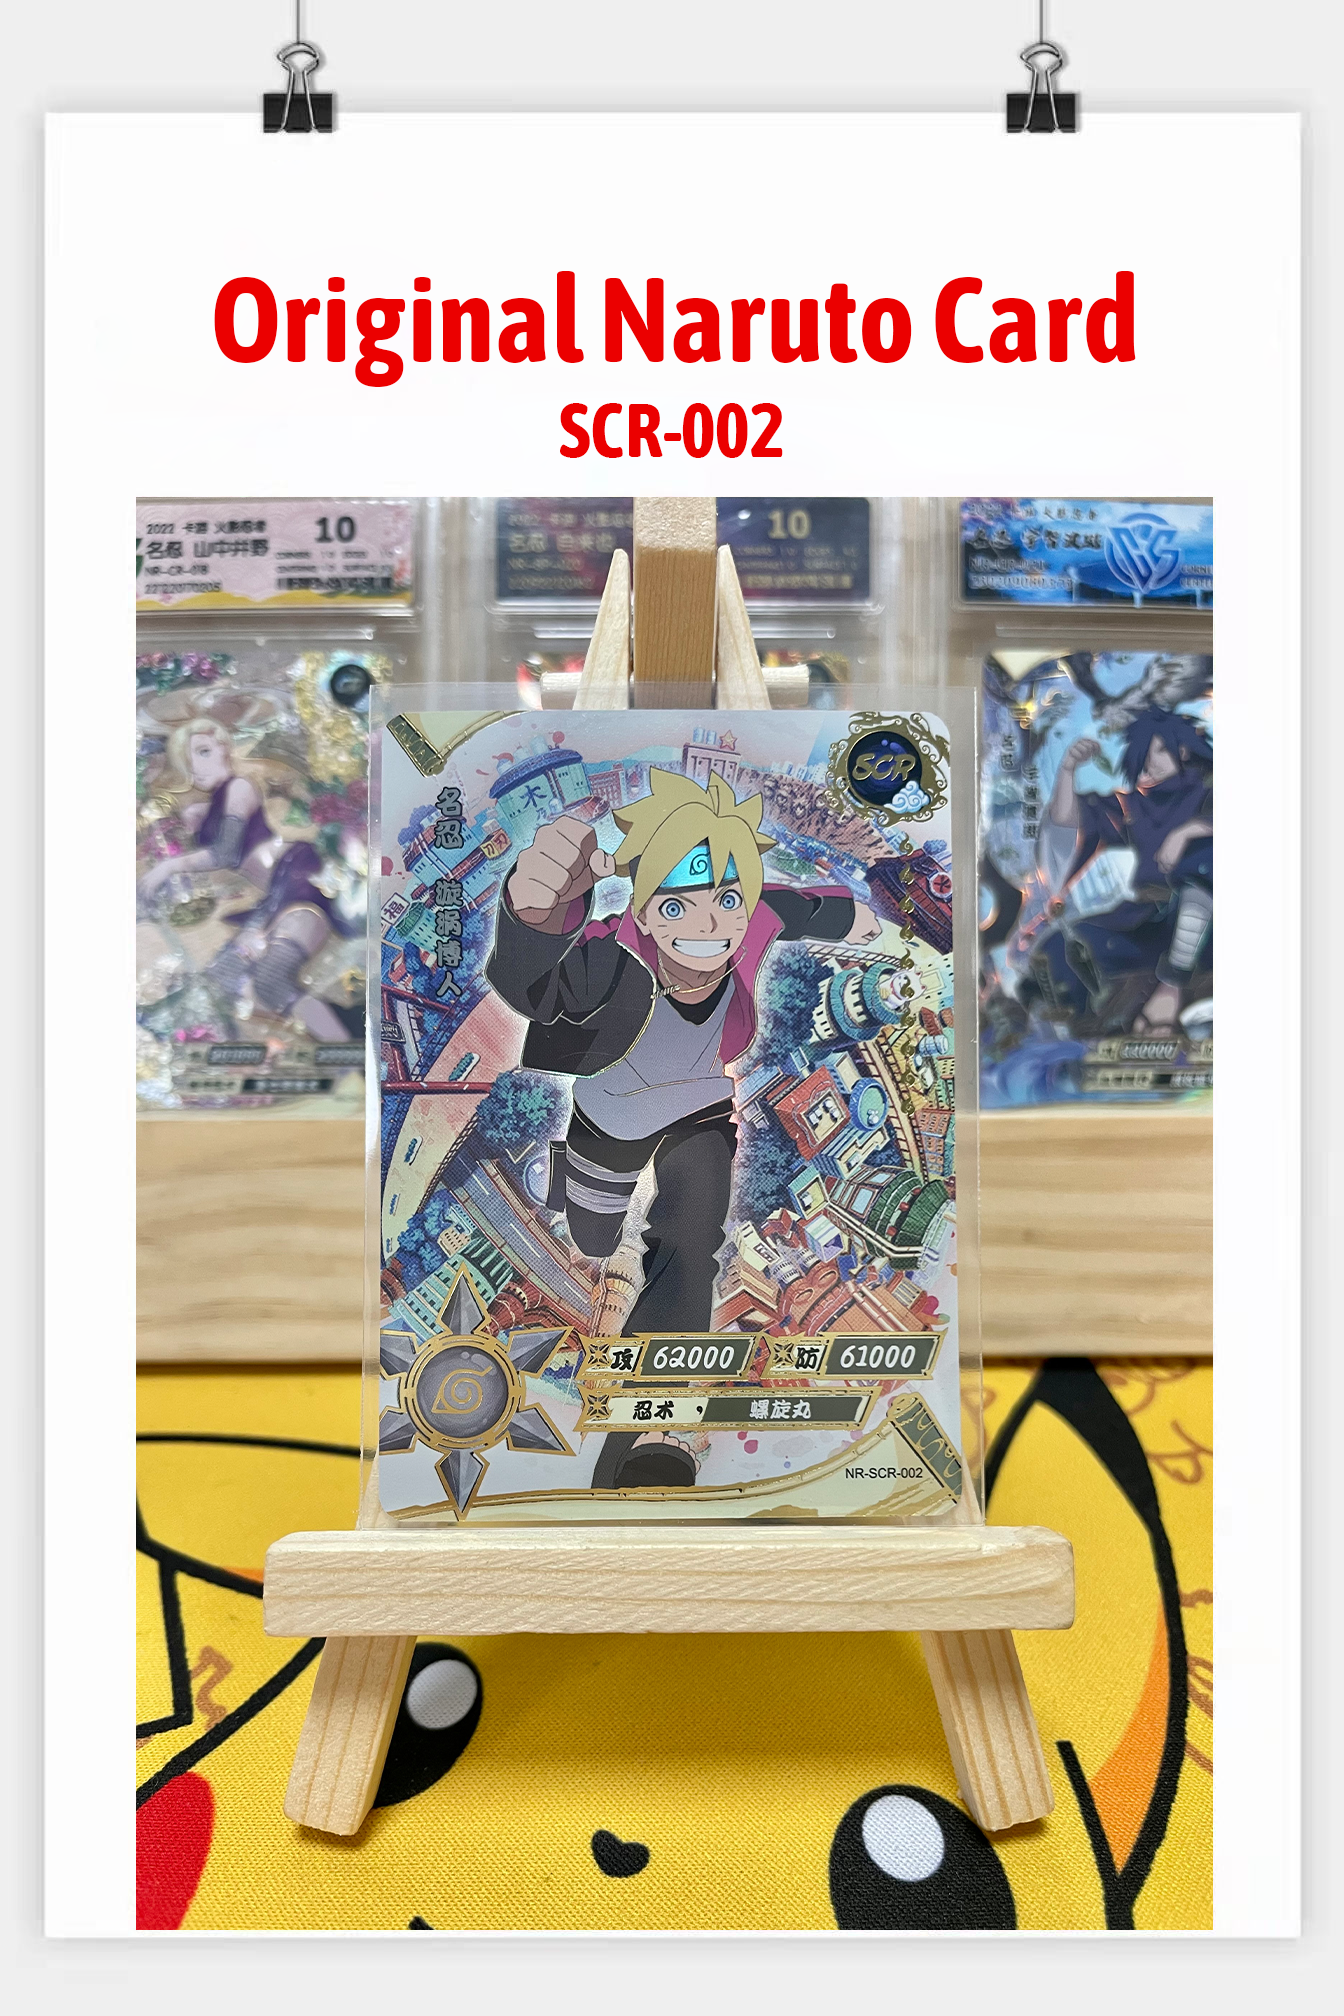 SCR - Naruto Card Rare SCR Serial